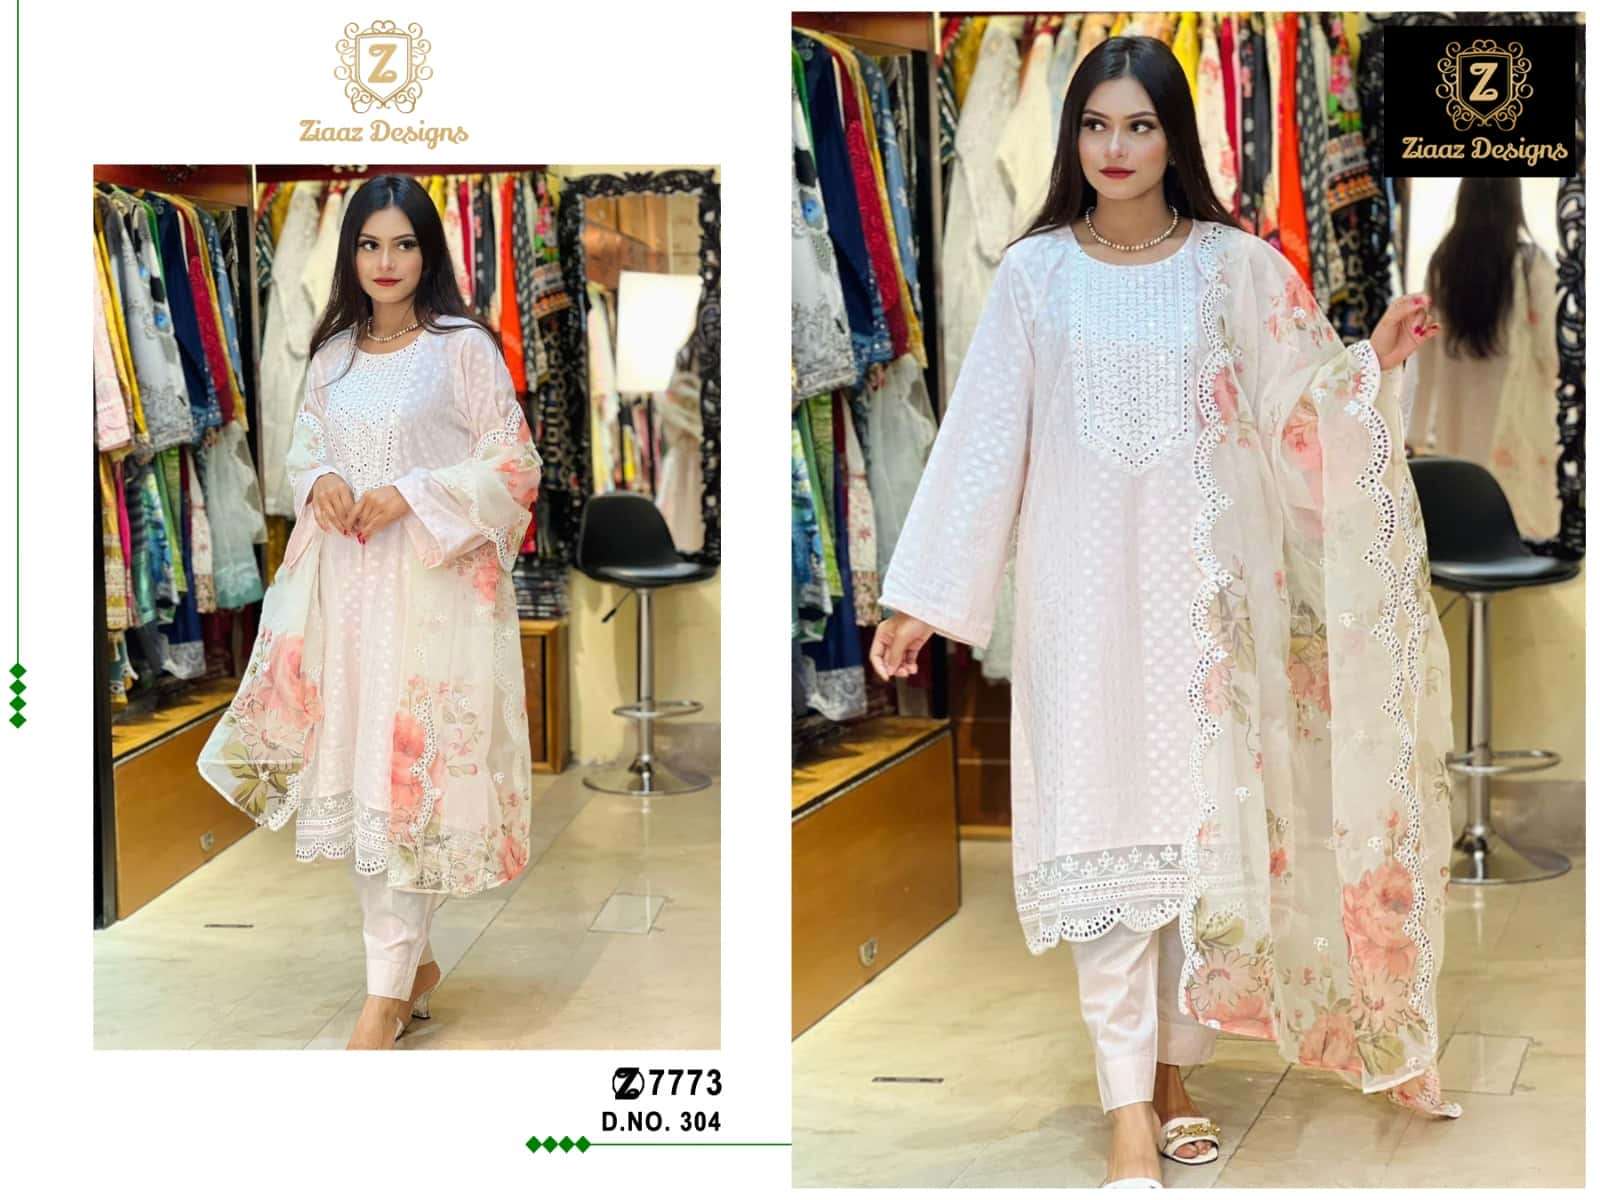 Ziaaz Designs 304 Pakistani Embroidered Salwara Suit Collection